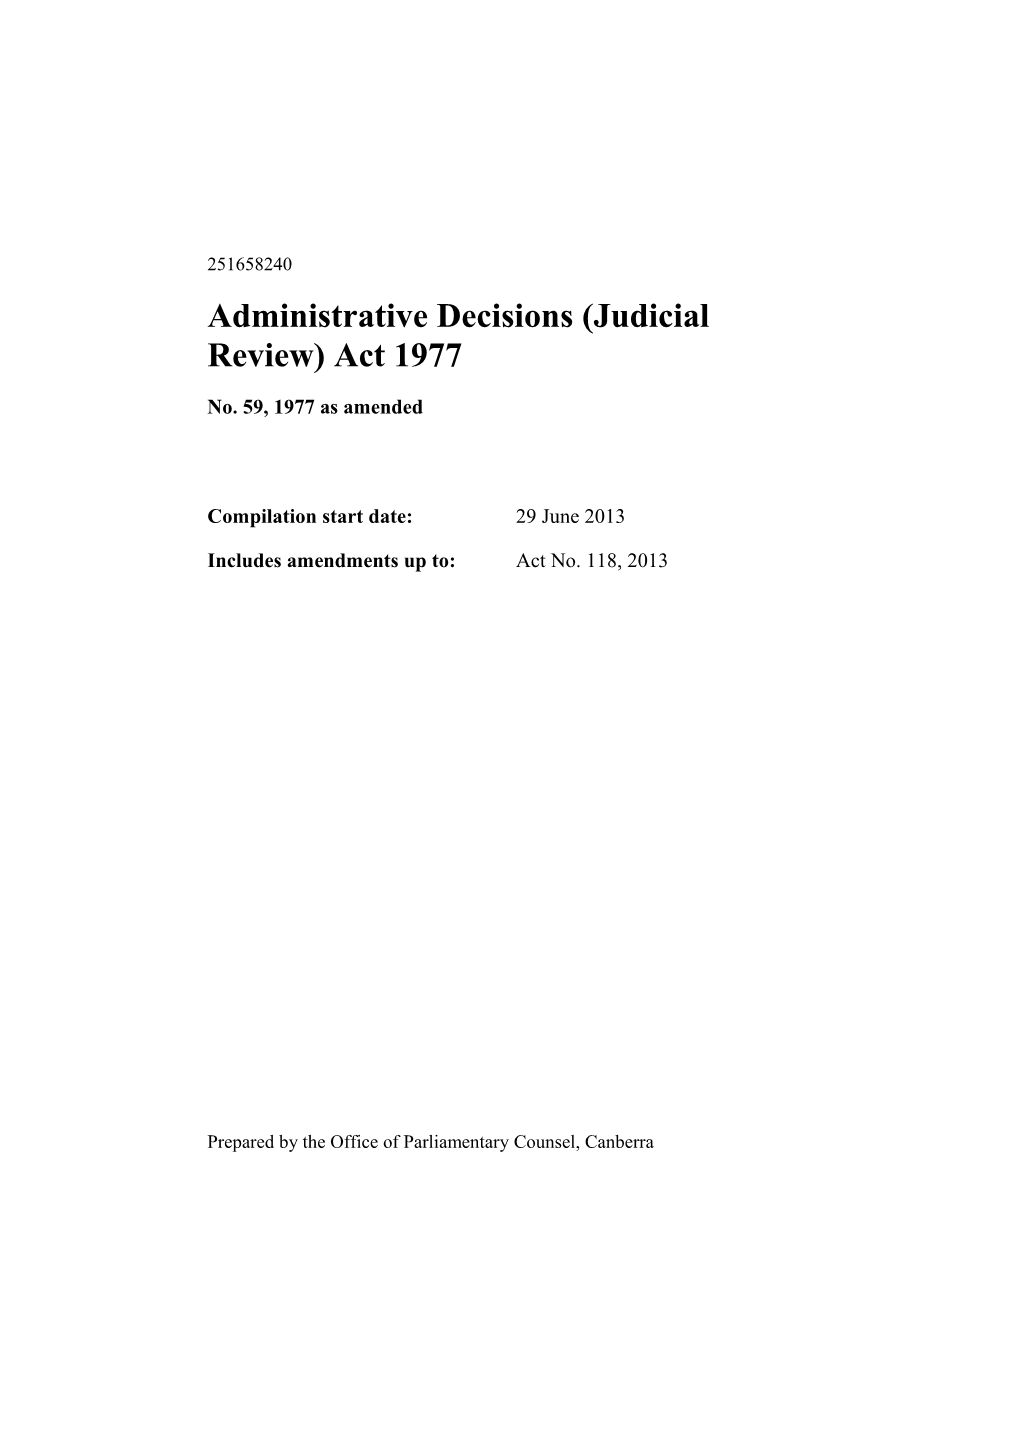 Administrative Decisions (Judicial Review) Act 1977